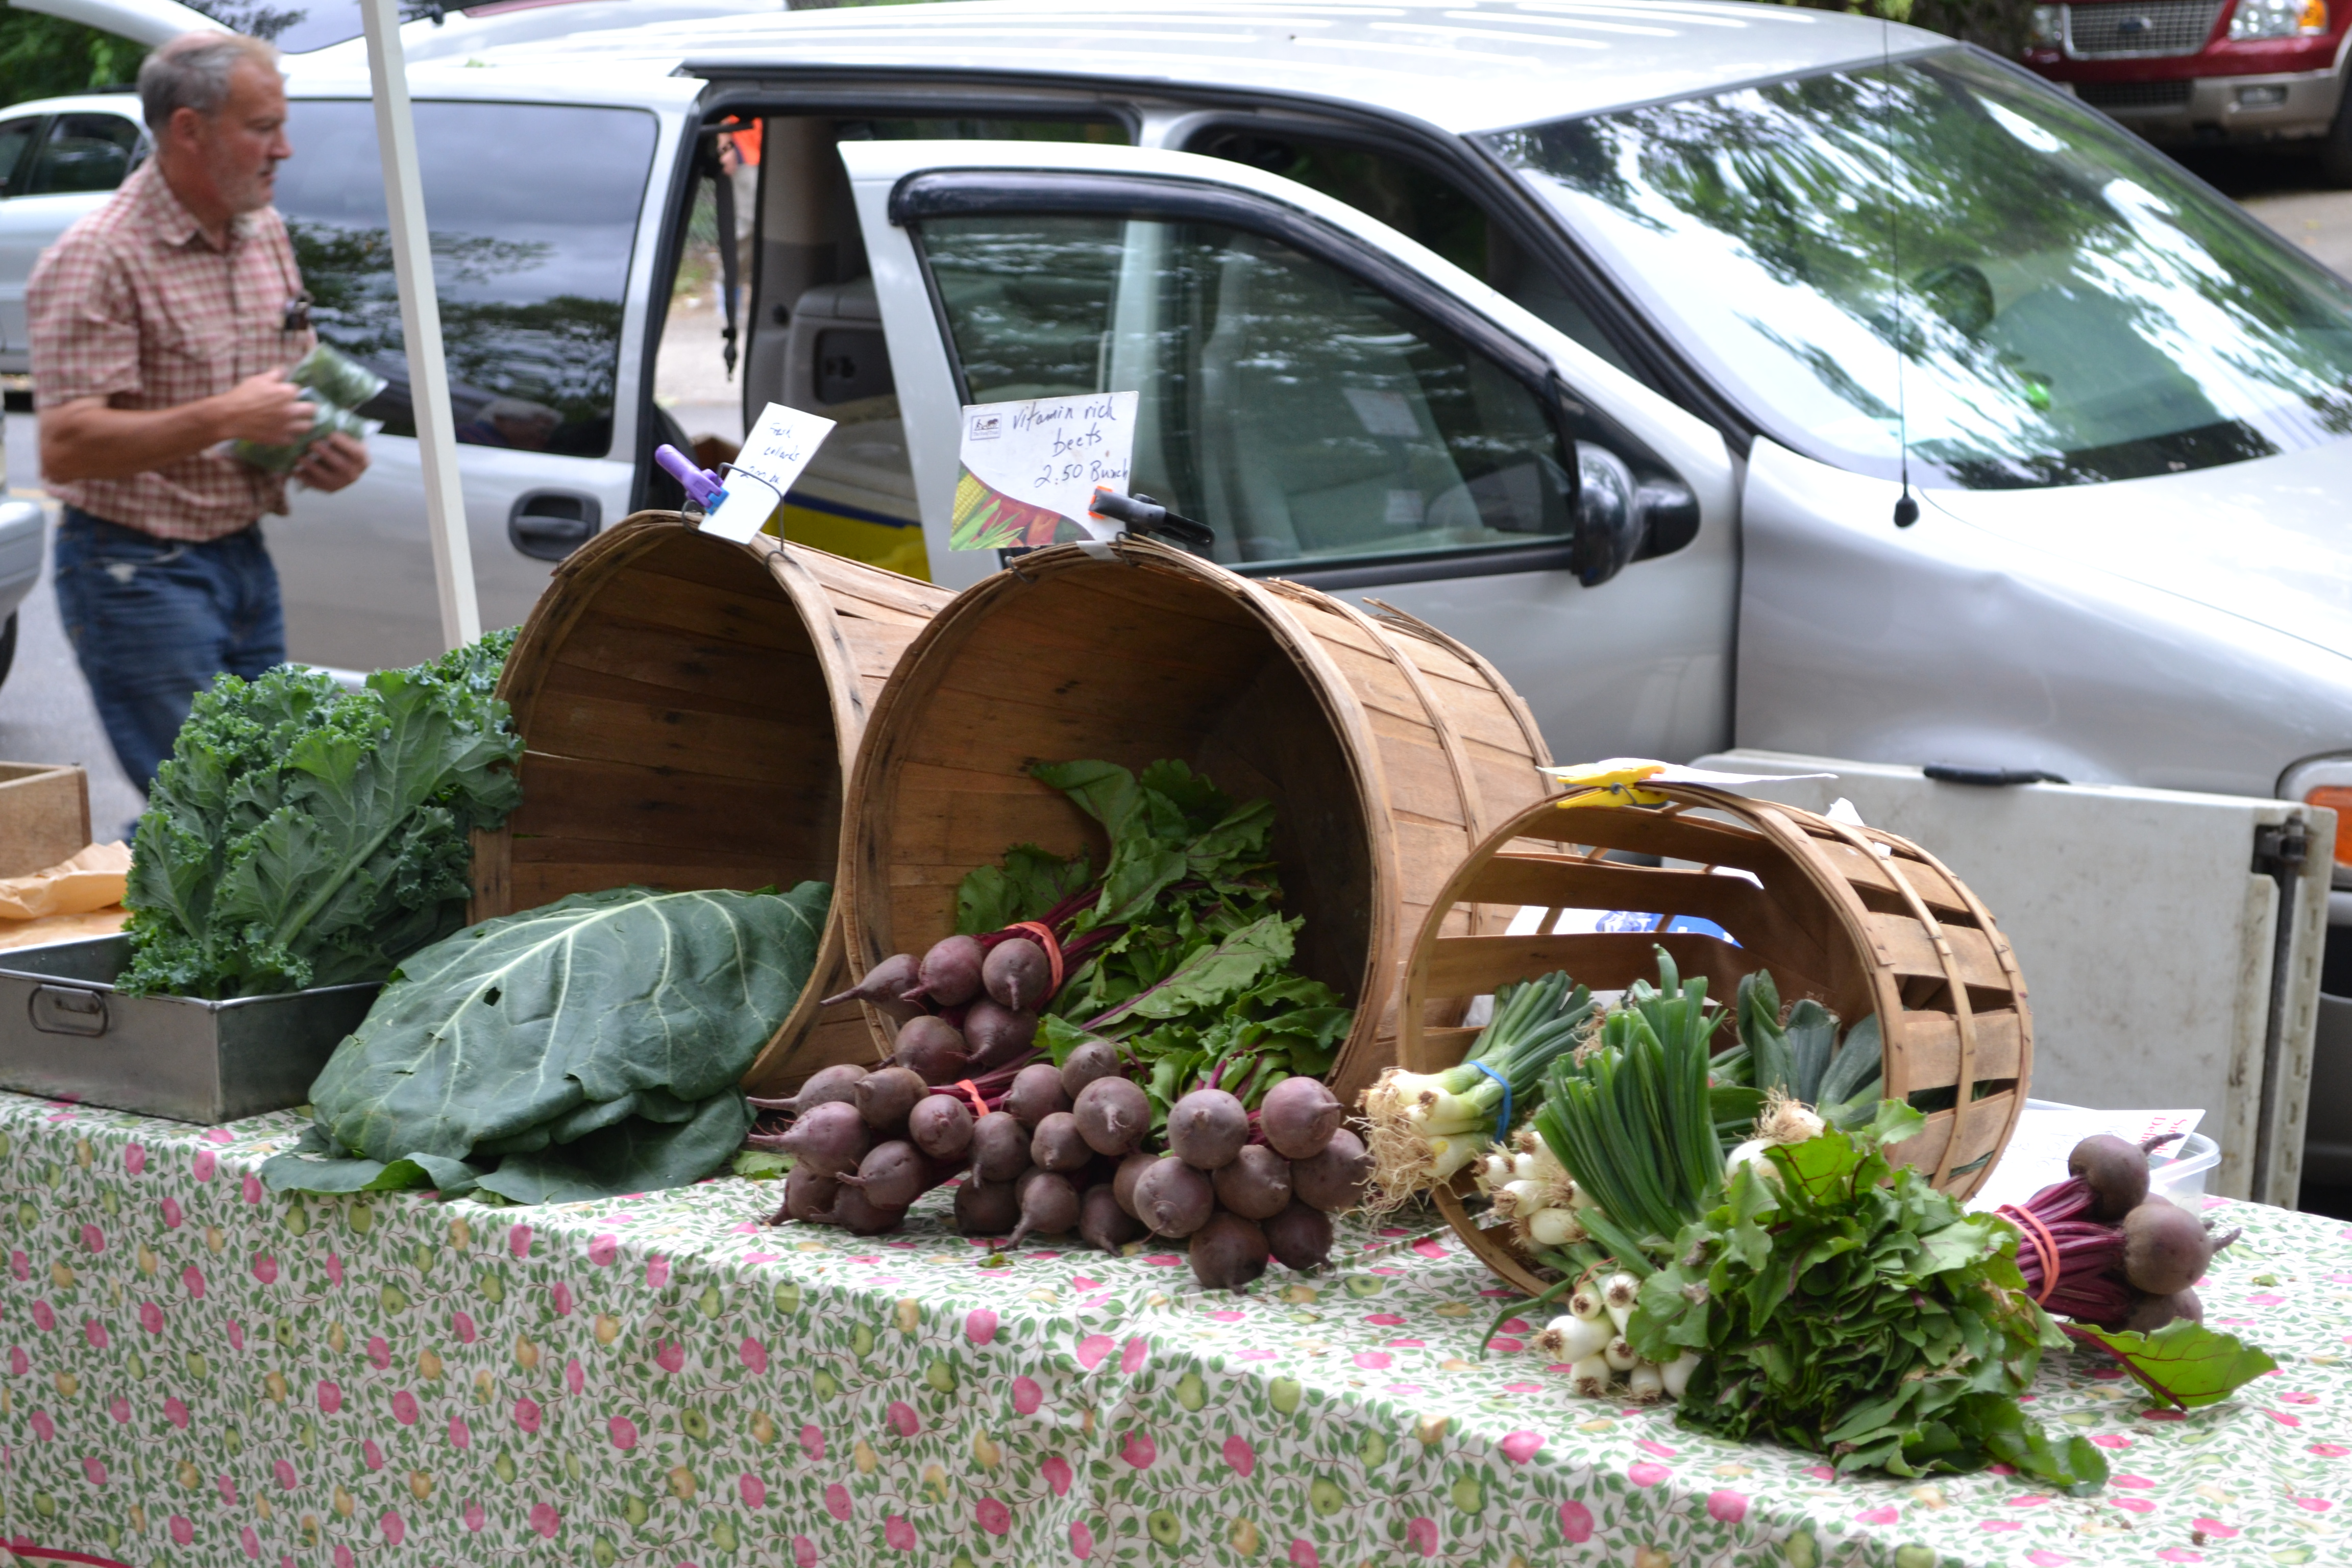 The Thursday farmers' market returned to Clark Park this week